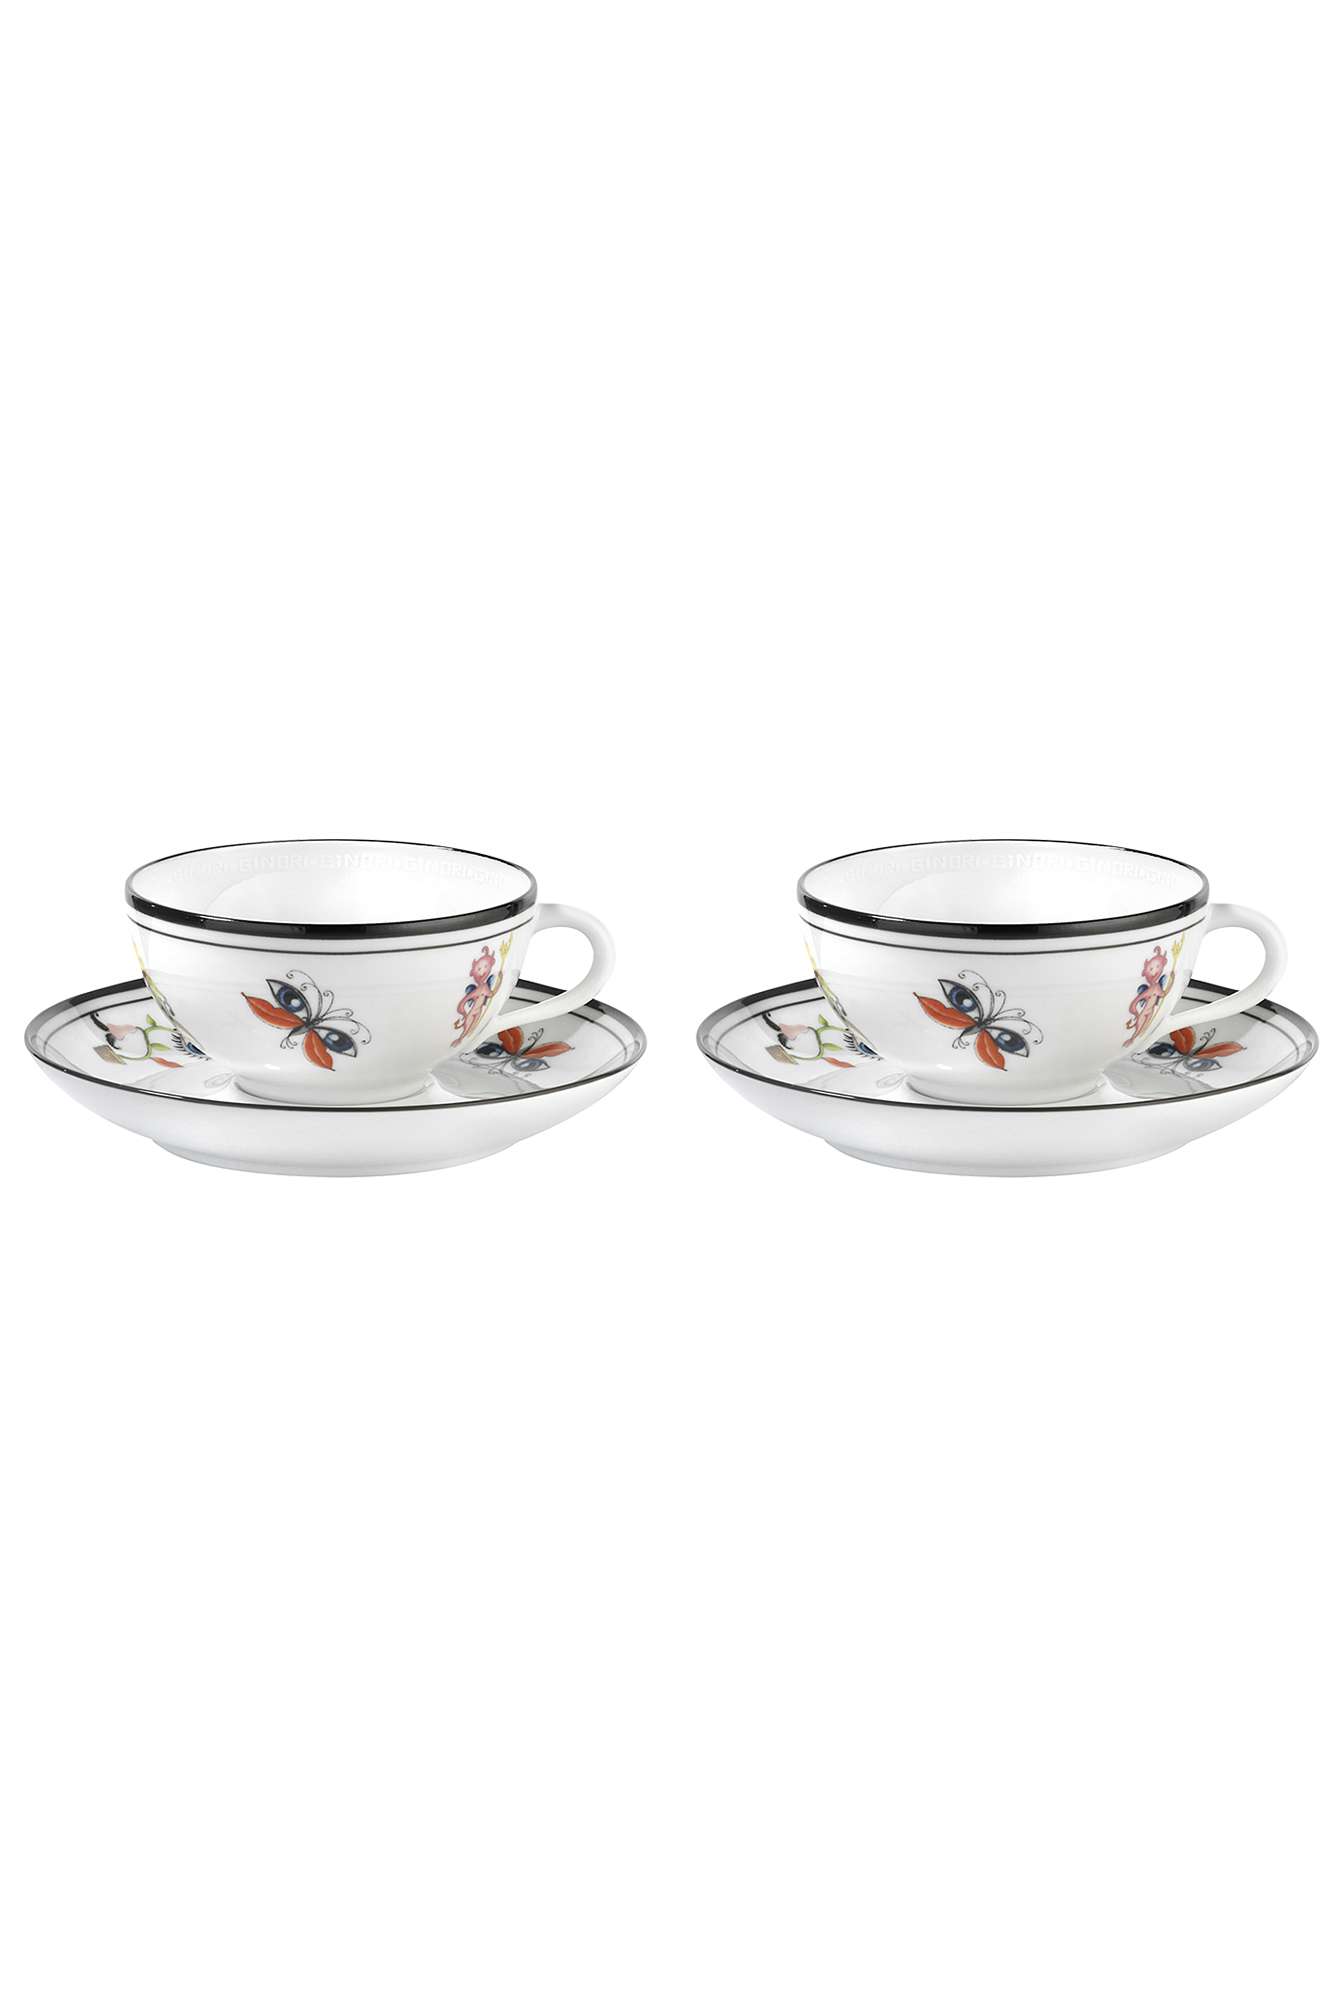 Arcadia Set Of 2 Tea Cups With Saucers - FARADAYS